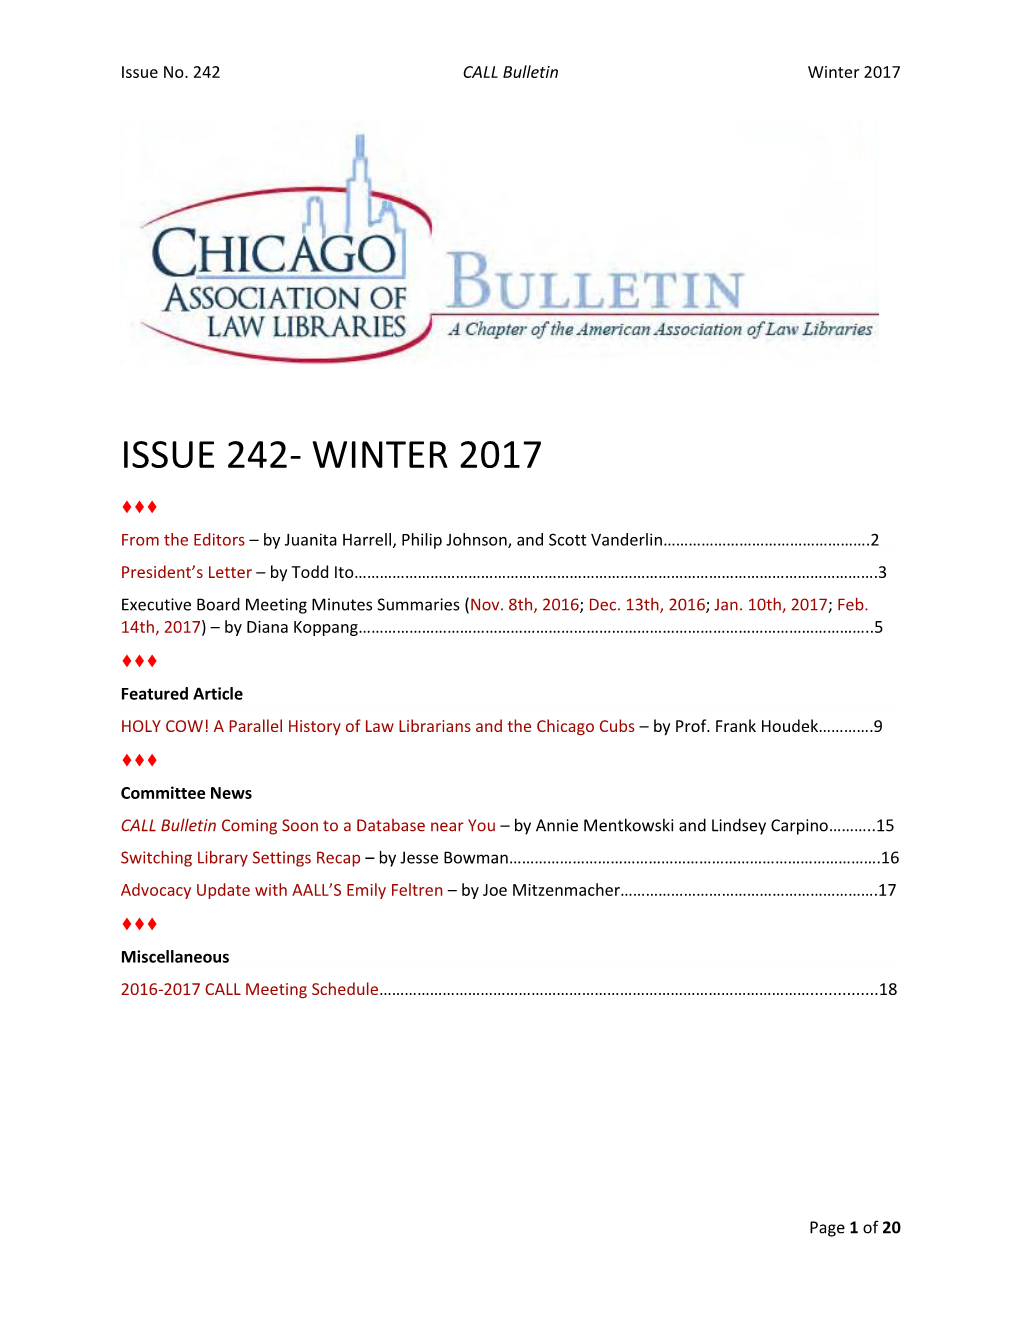 Issue 242- Winter 2017